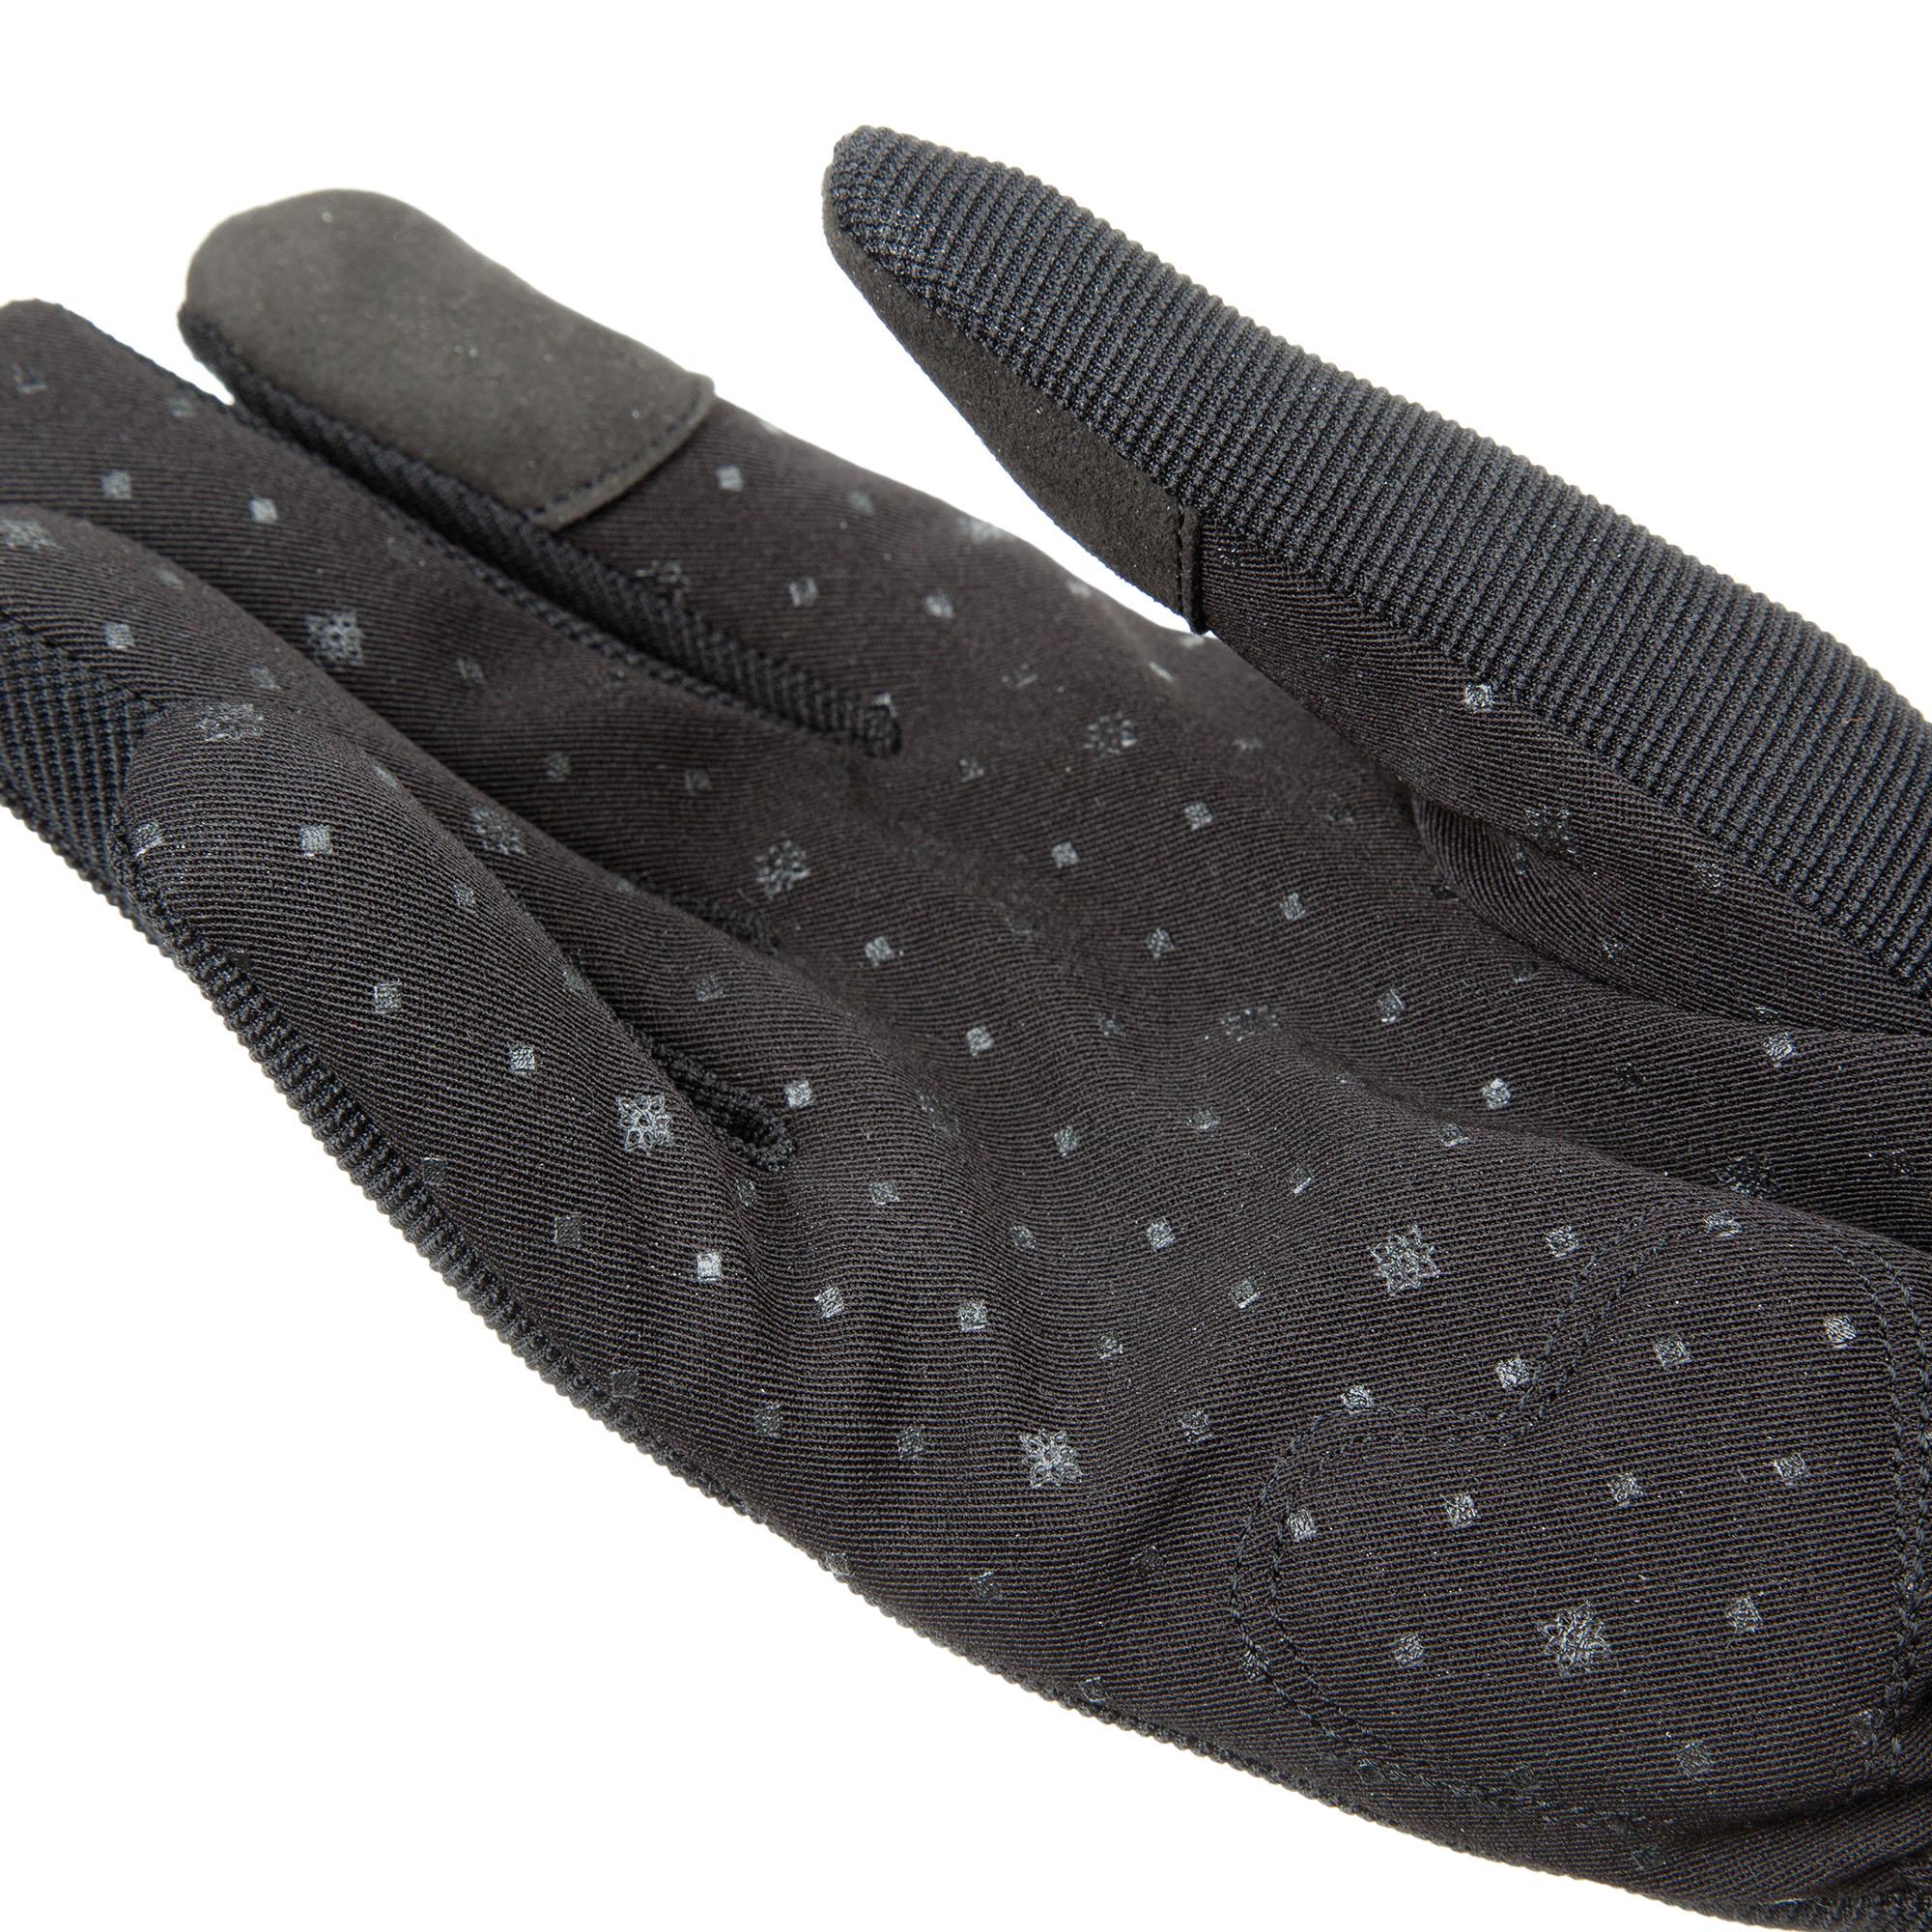 New Mary Gloves Black 